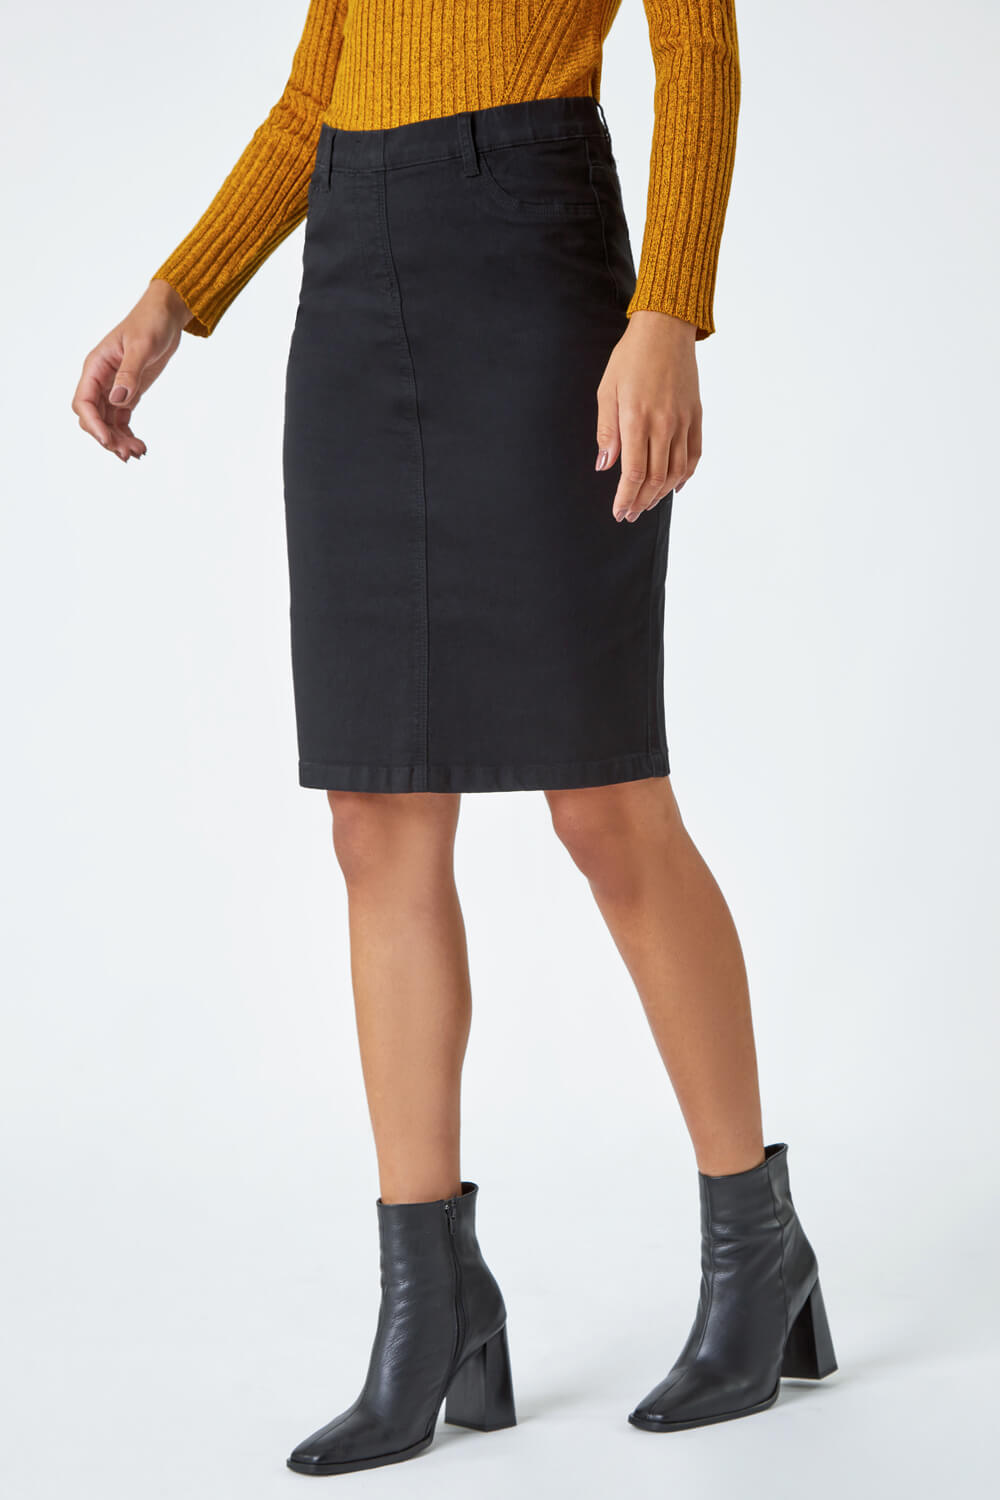 Black Cotton Denim Stretch Skirt, Image 4 of 5